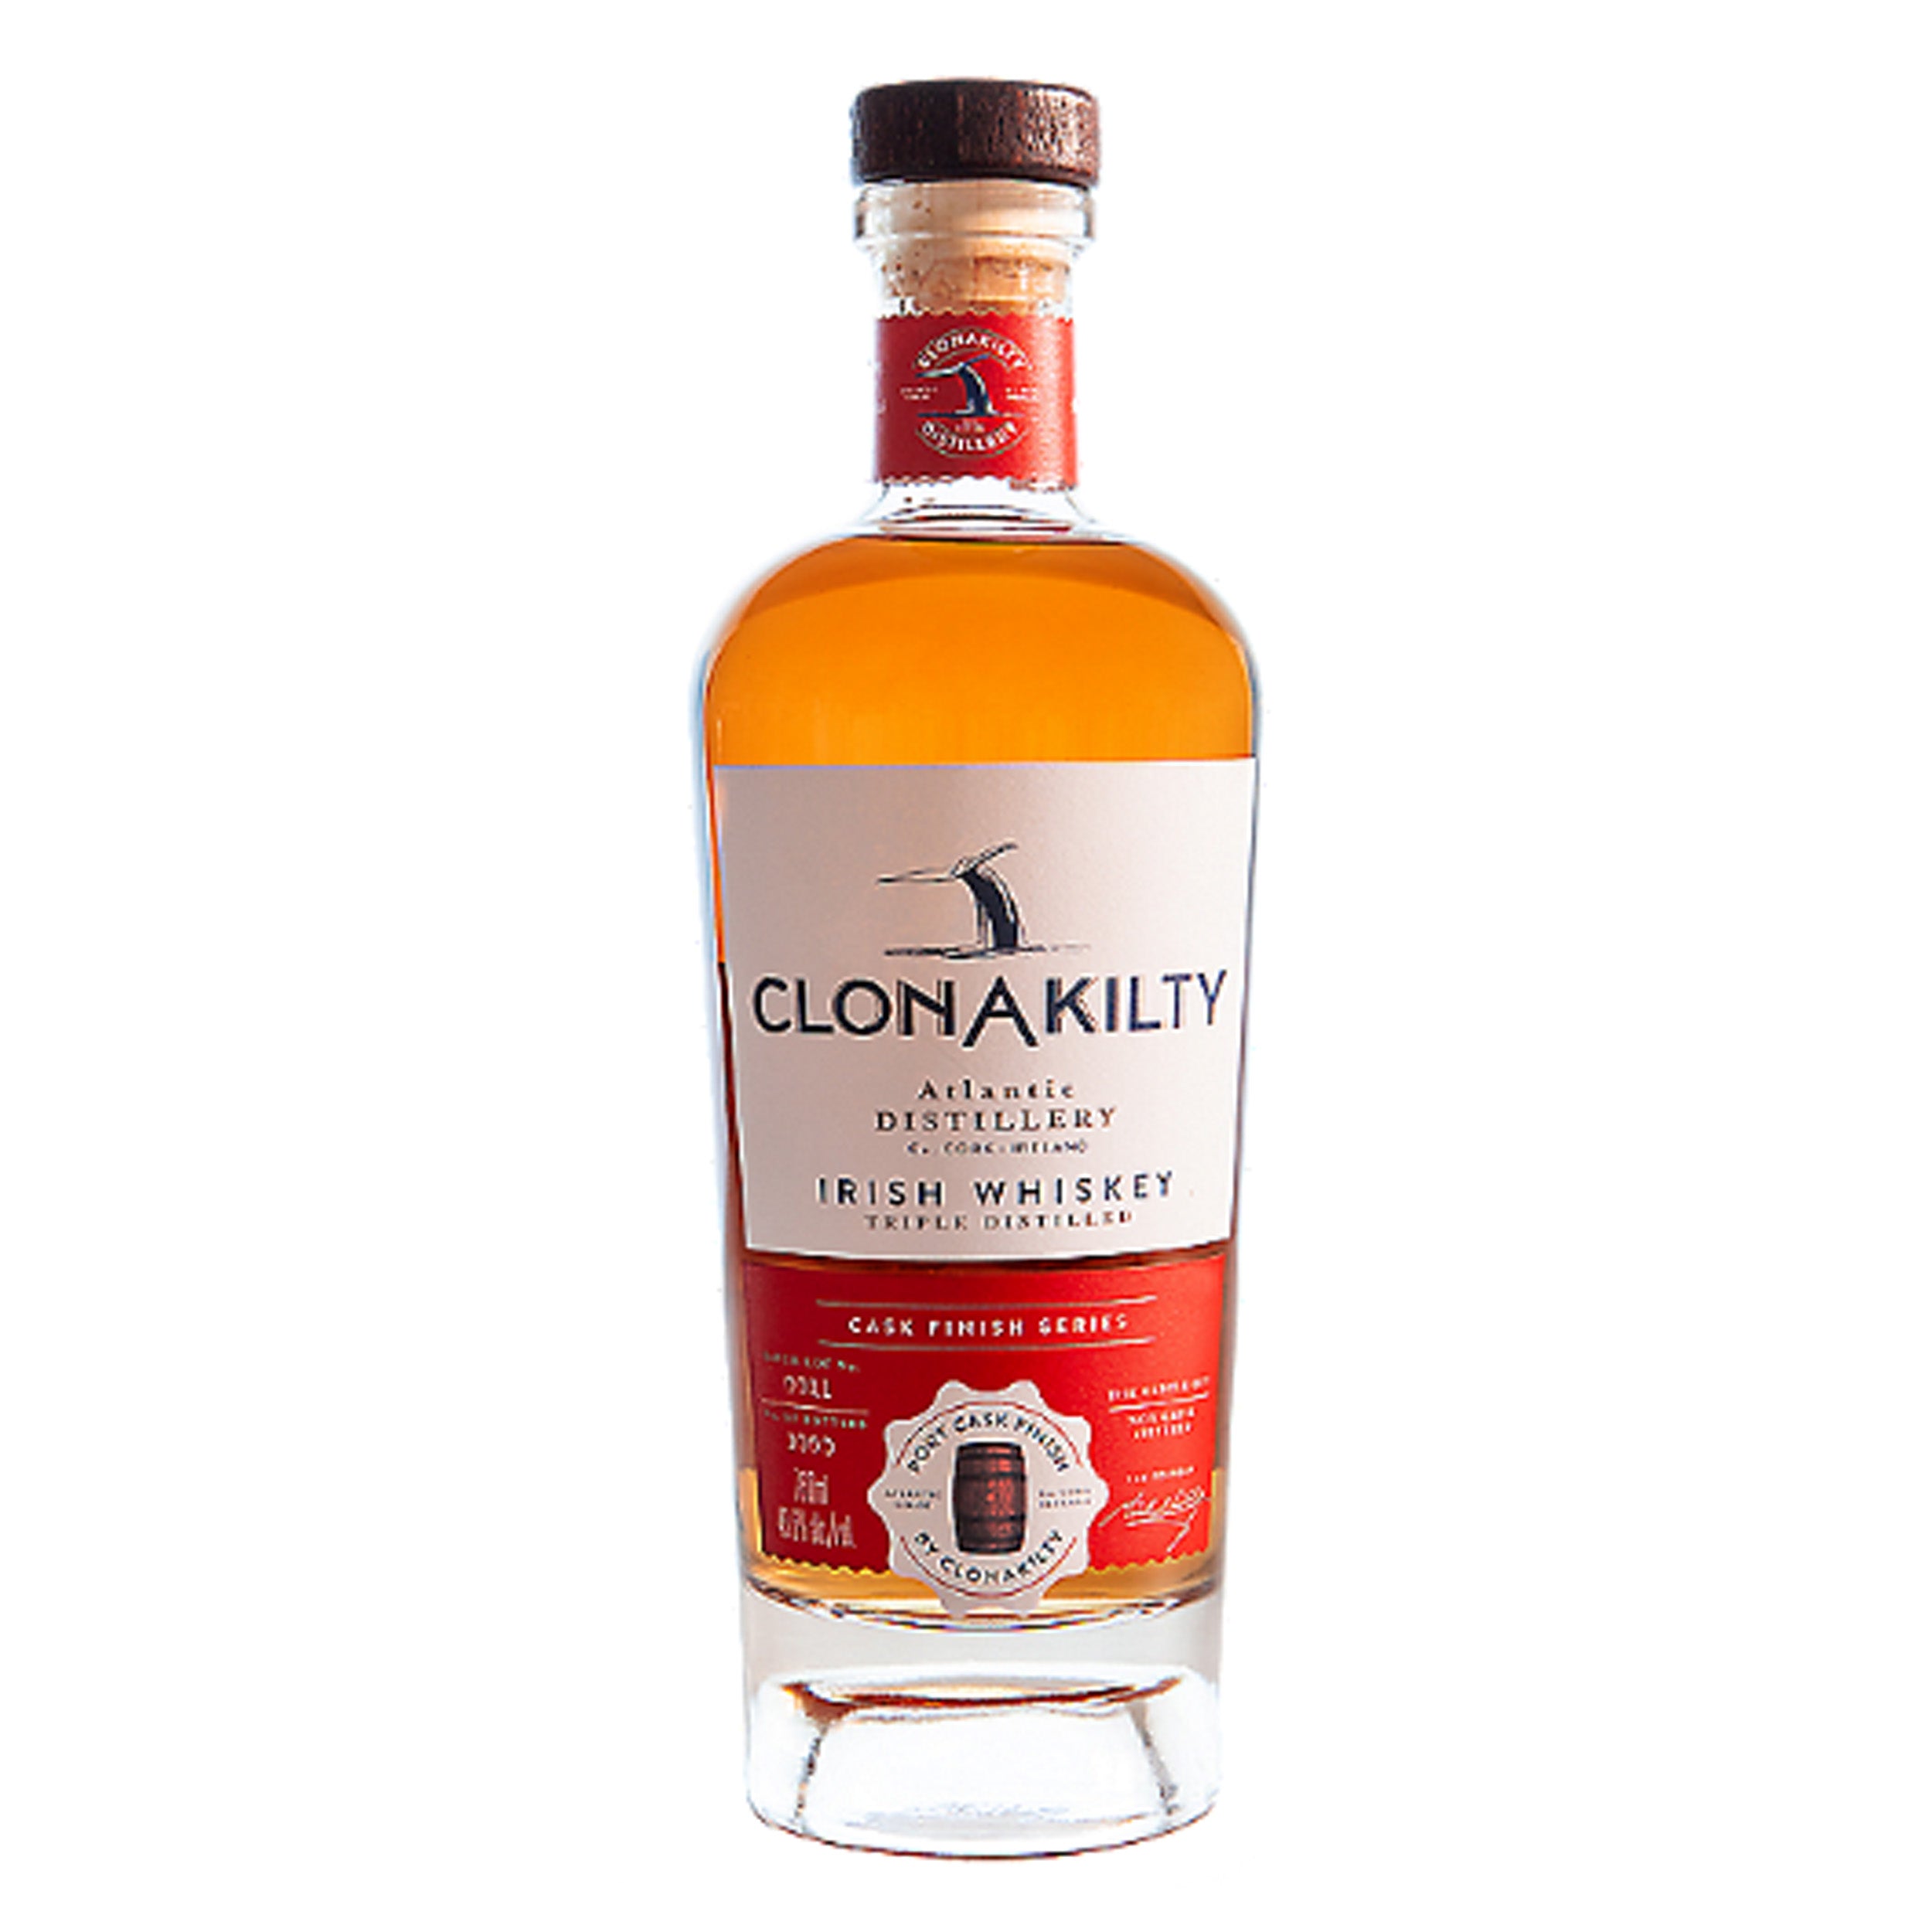 Clonakilty Blended Irish Whiskey Cask Finish Series